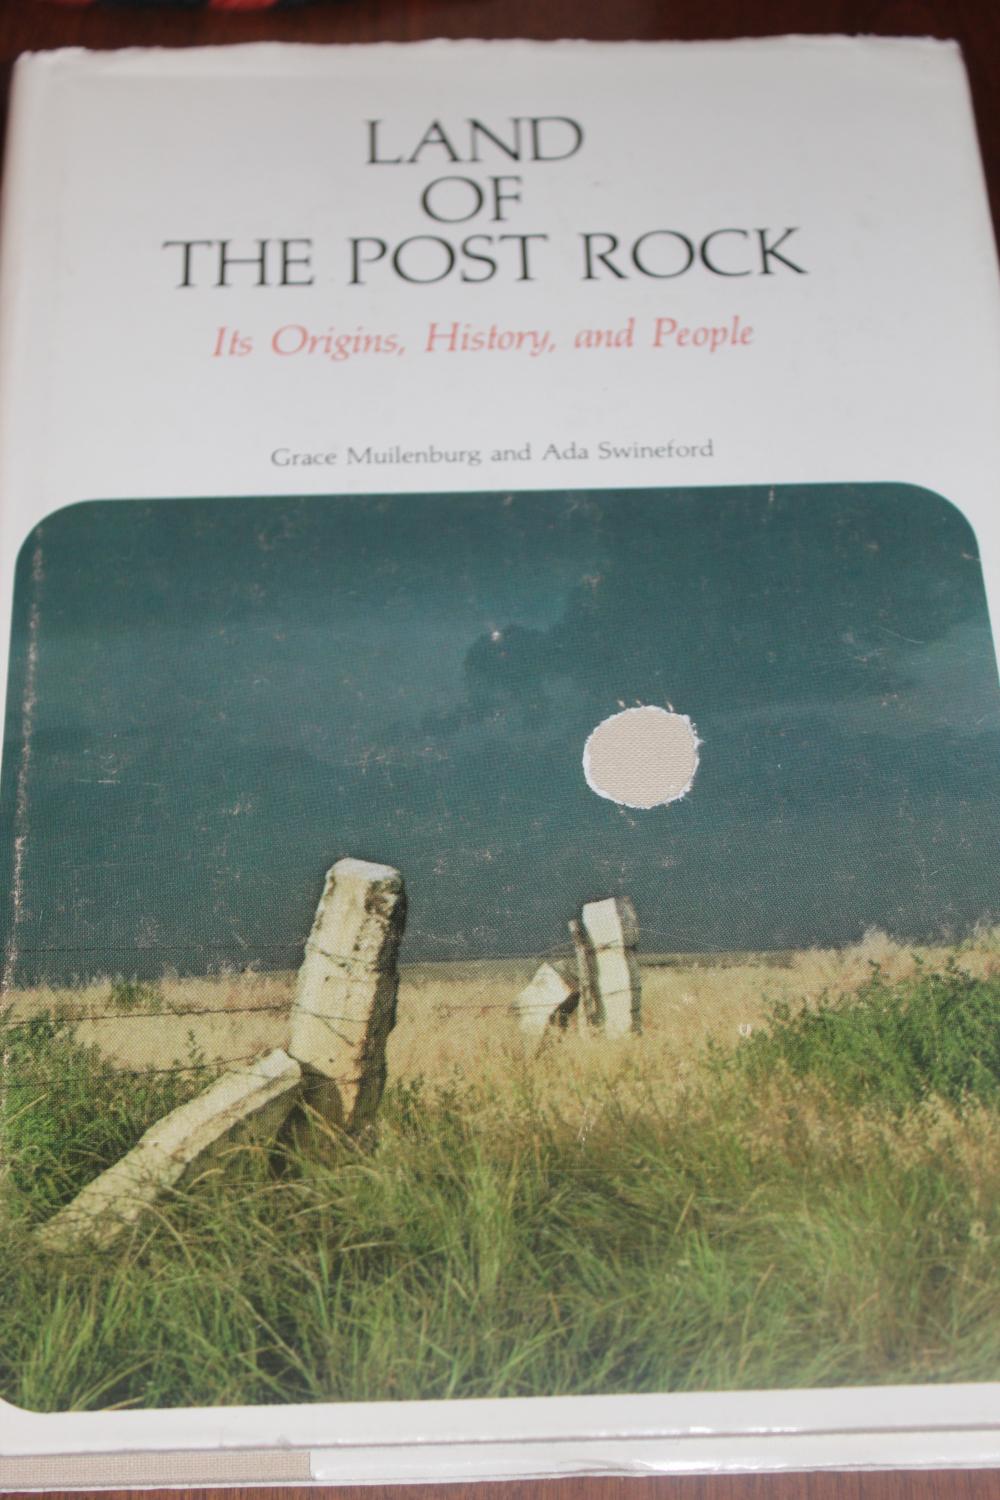 Land of the Post Rock - Muilenberg, Grace and Swineford, Ada